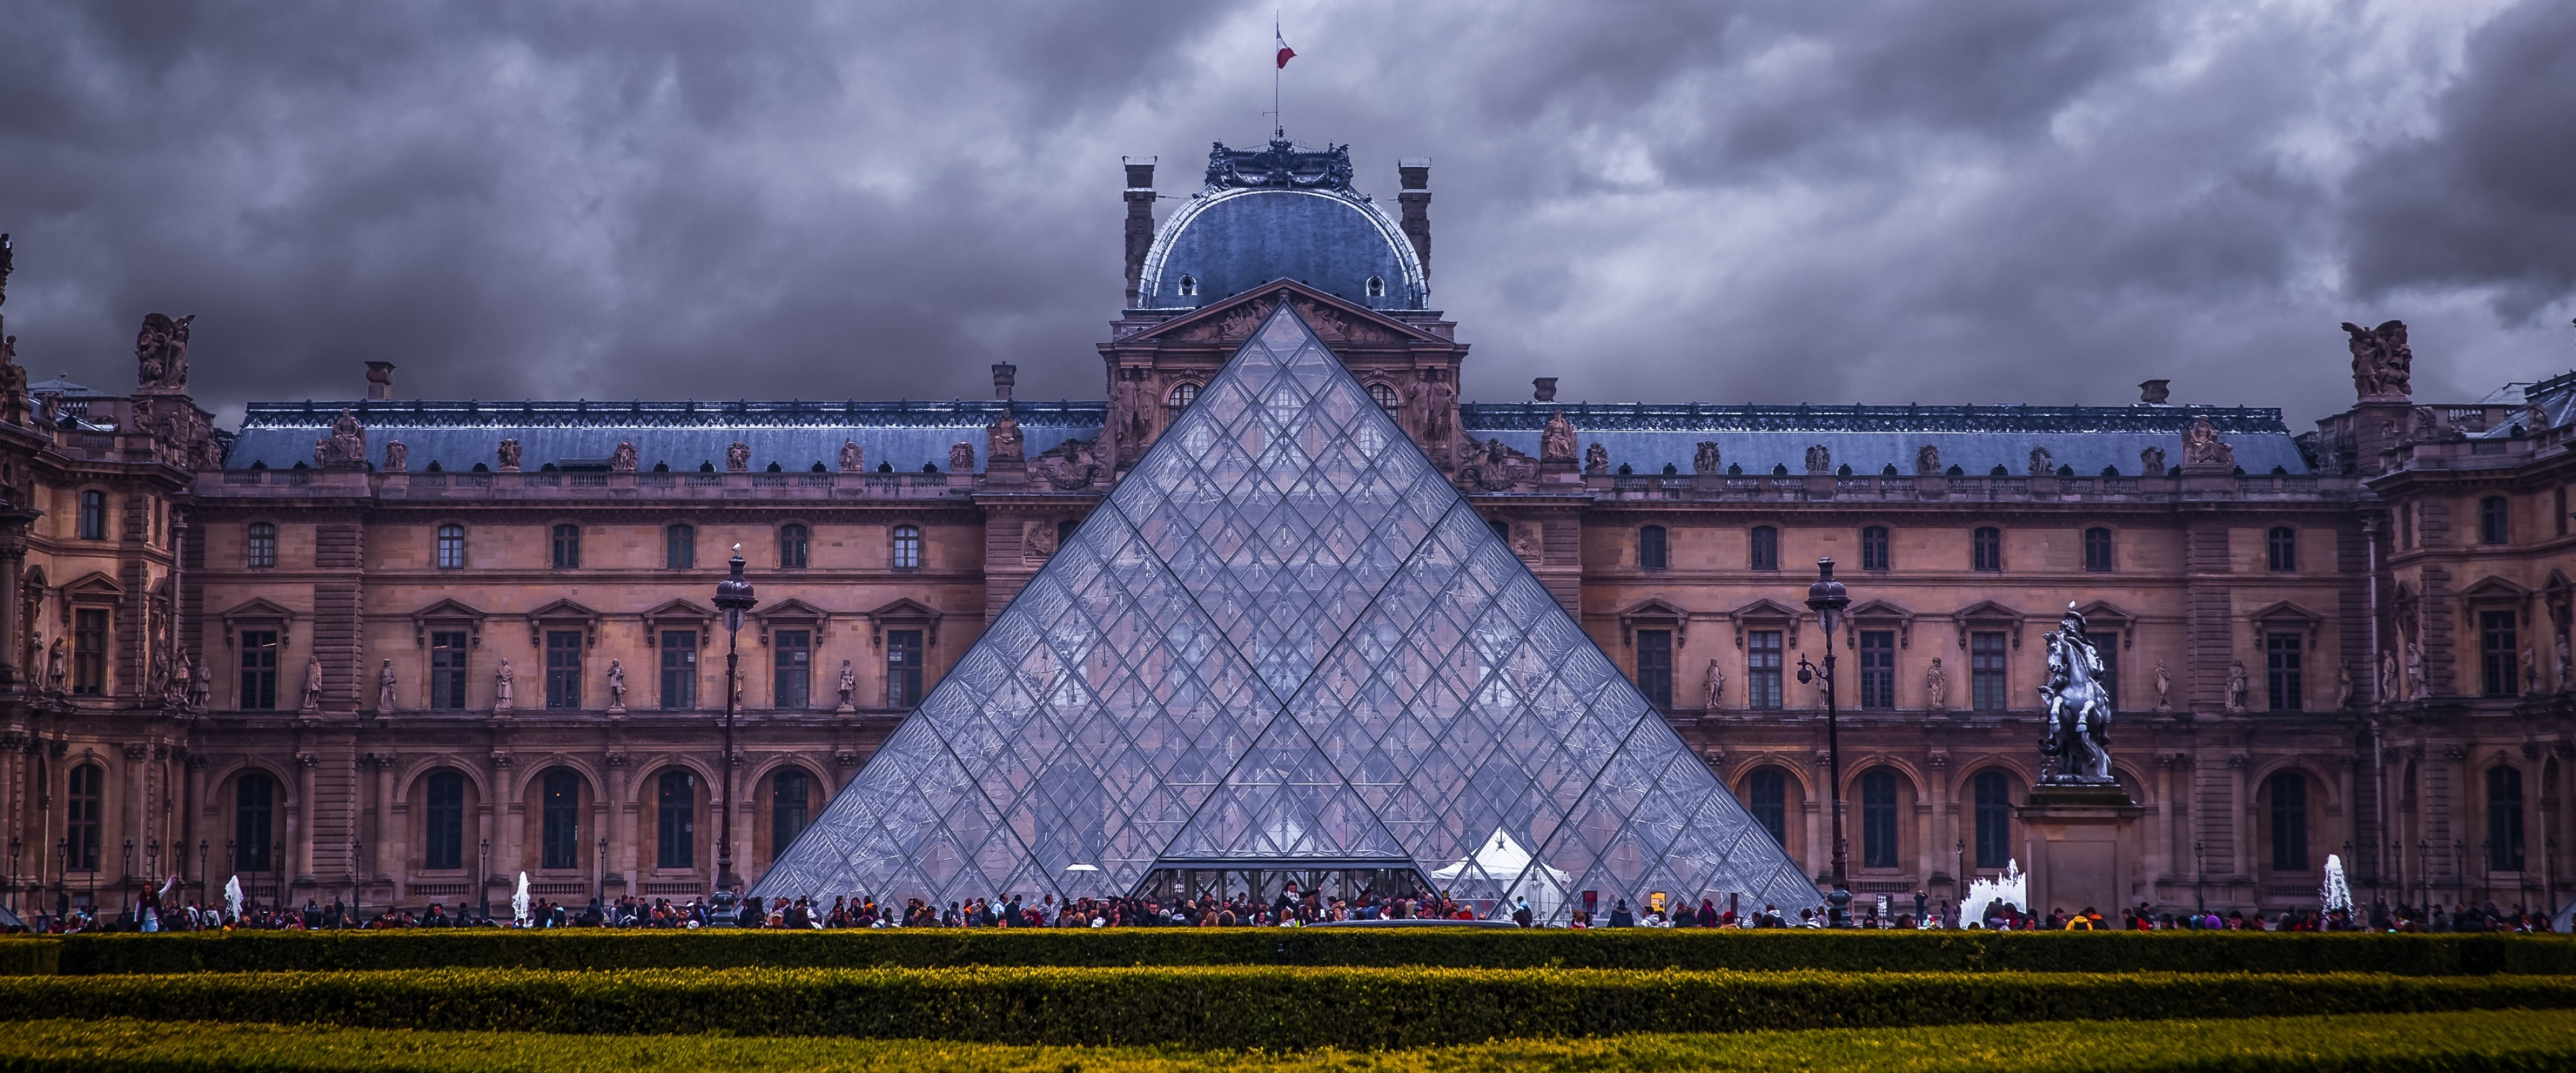 Immersive 4K wallpaper, Detailed museum view, Stunning Louvre display, High-resolution image, 3840x1600 Dual Screen Desktop